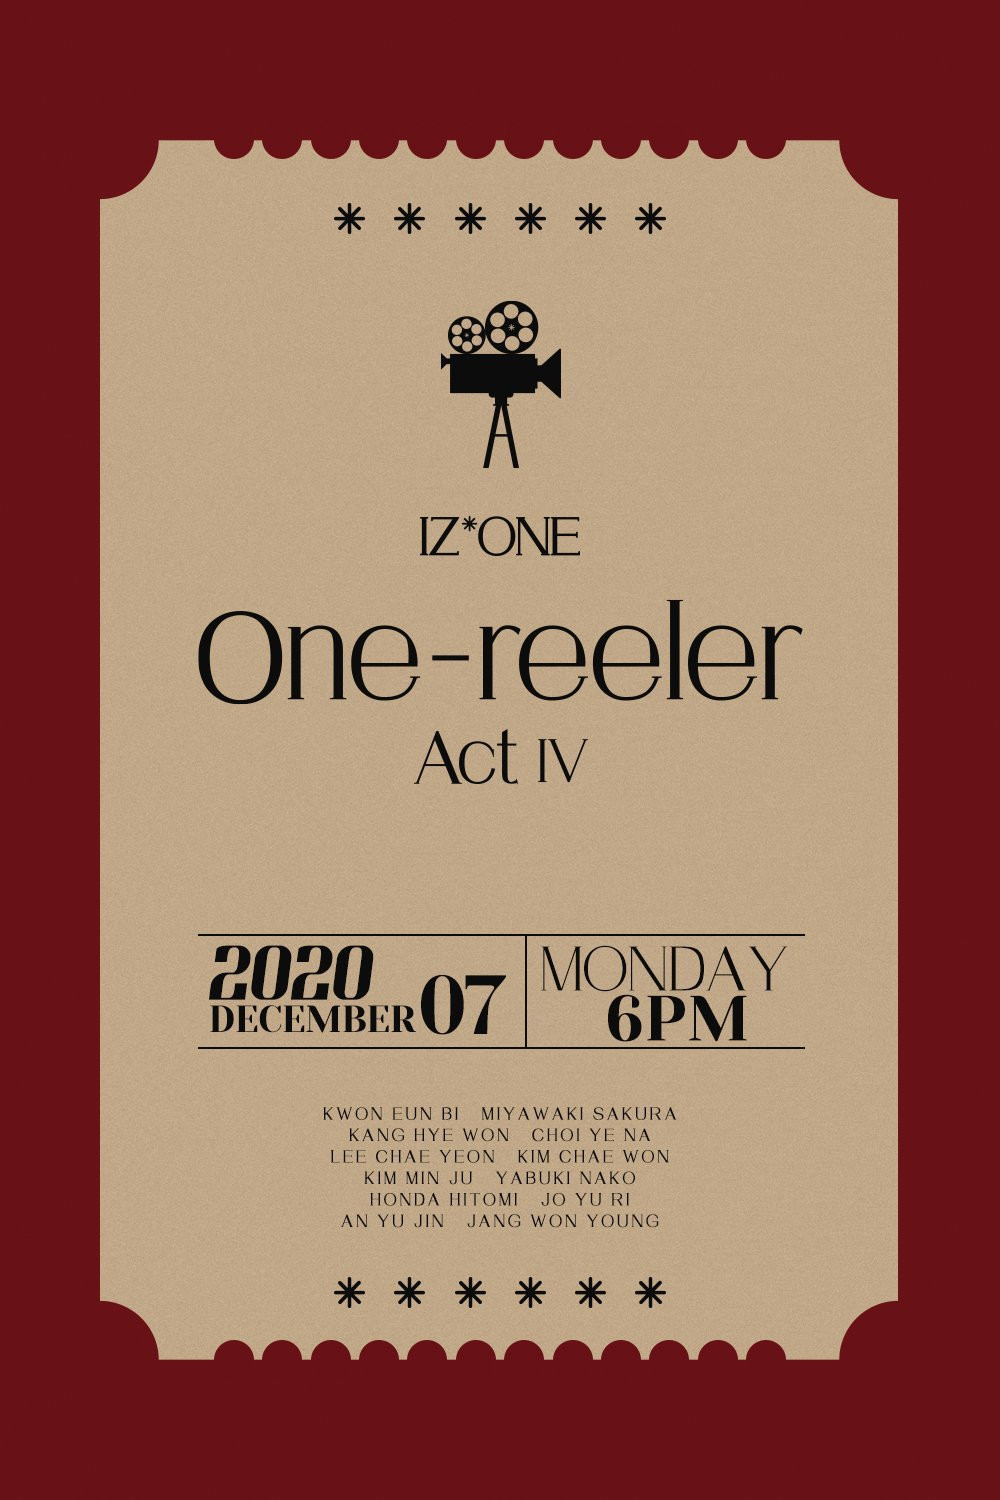 [Камбэк] IZ*ONE "One-reeler / Act IV": музыкальное видео "Panorama" + перфоманс версия + практика танца